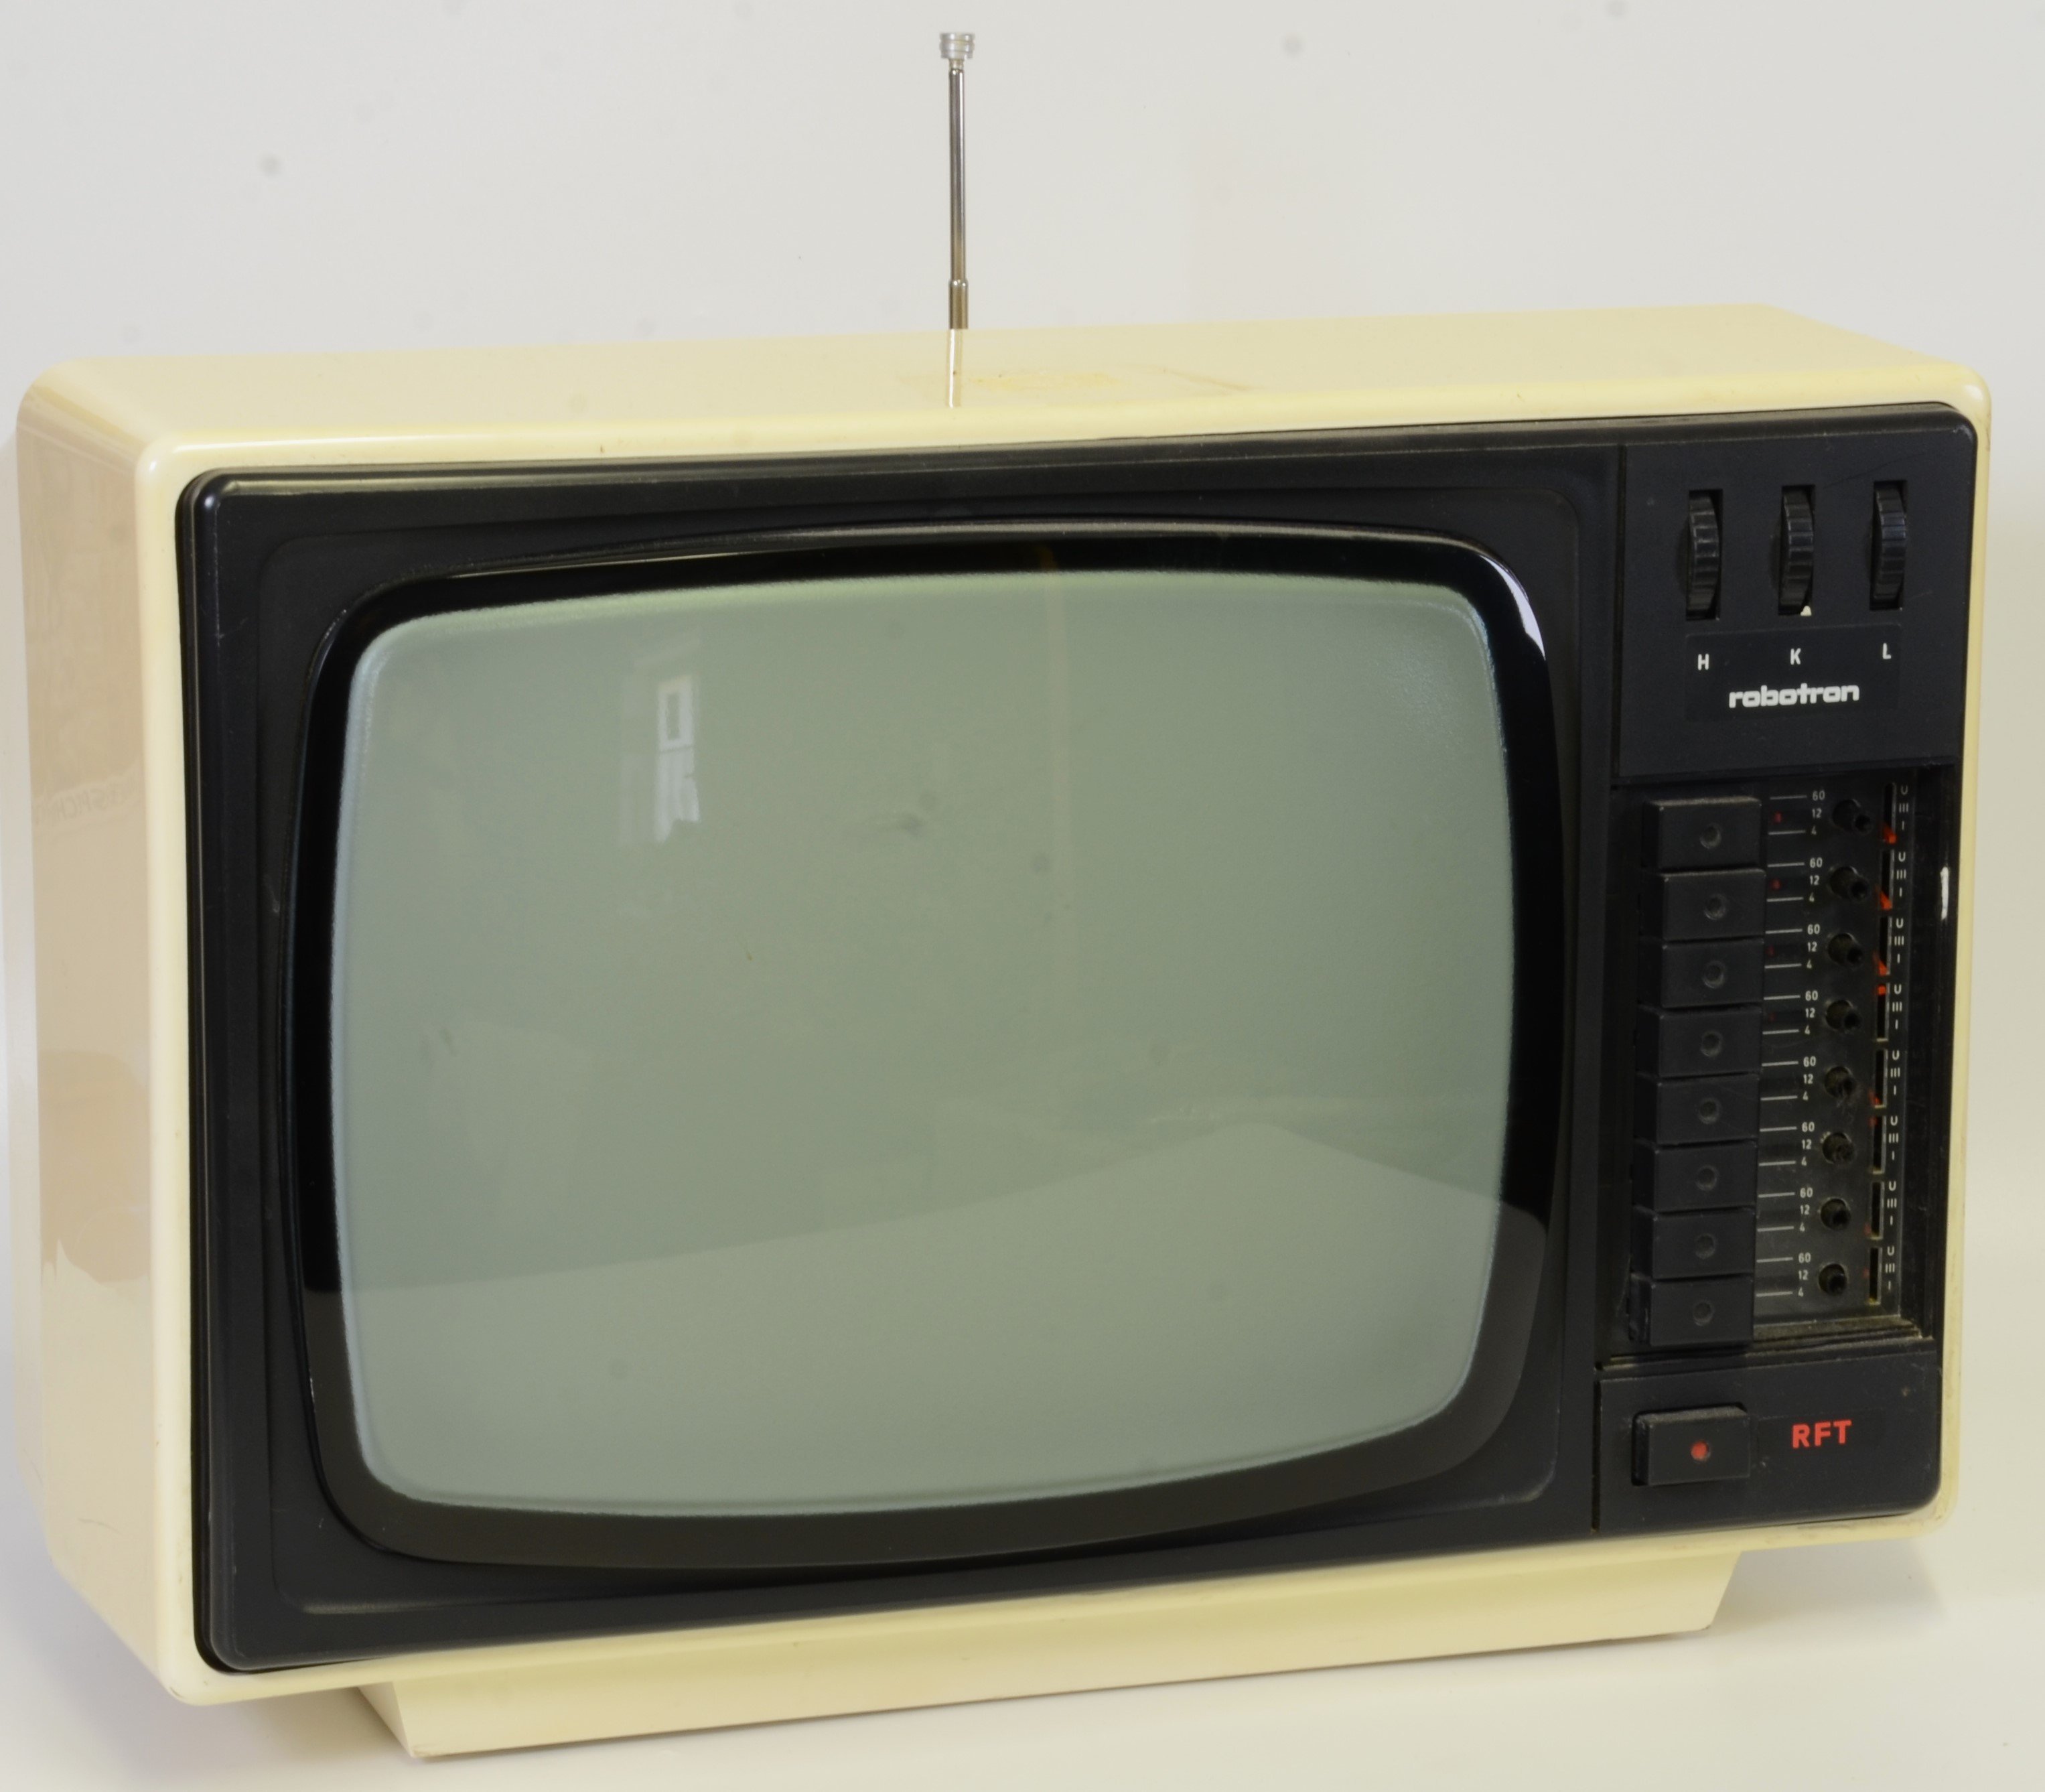 Tragbares Fernsehgerät des VEB Kombinat Robotron (DDR Geschichtsmuseum im Dokumentationszentrum Perleberg CC BY-SA)